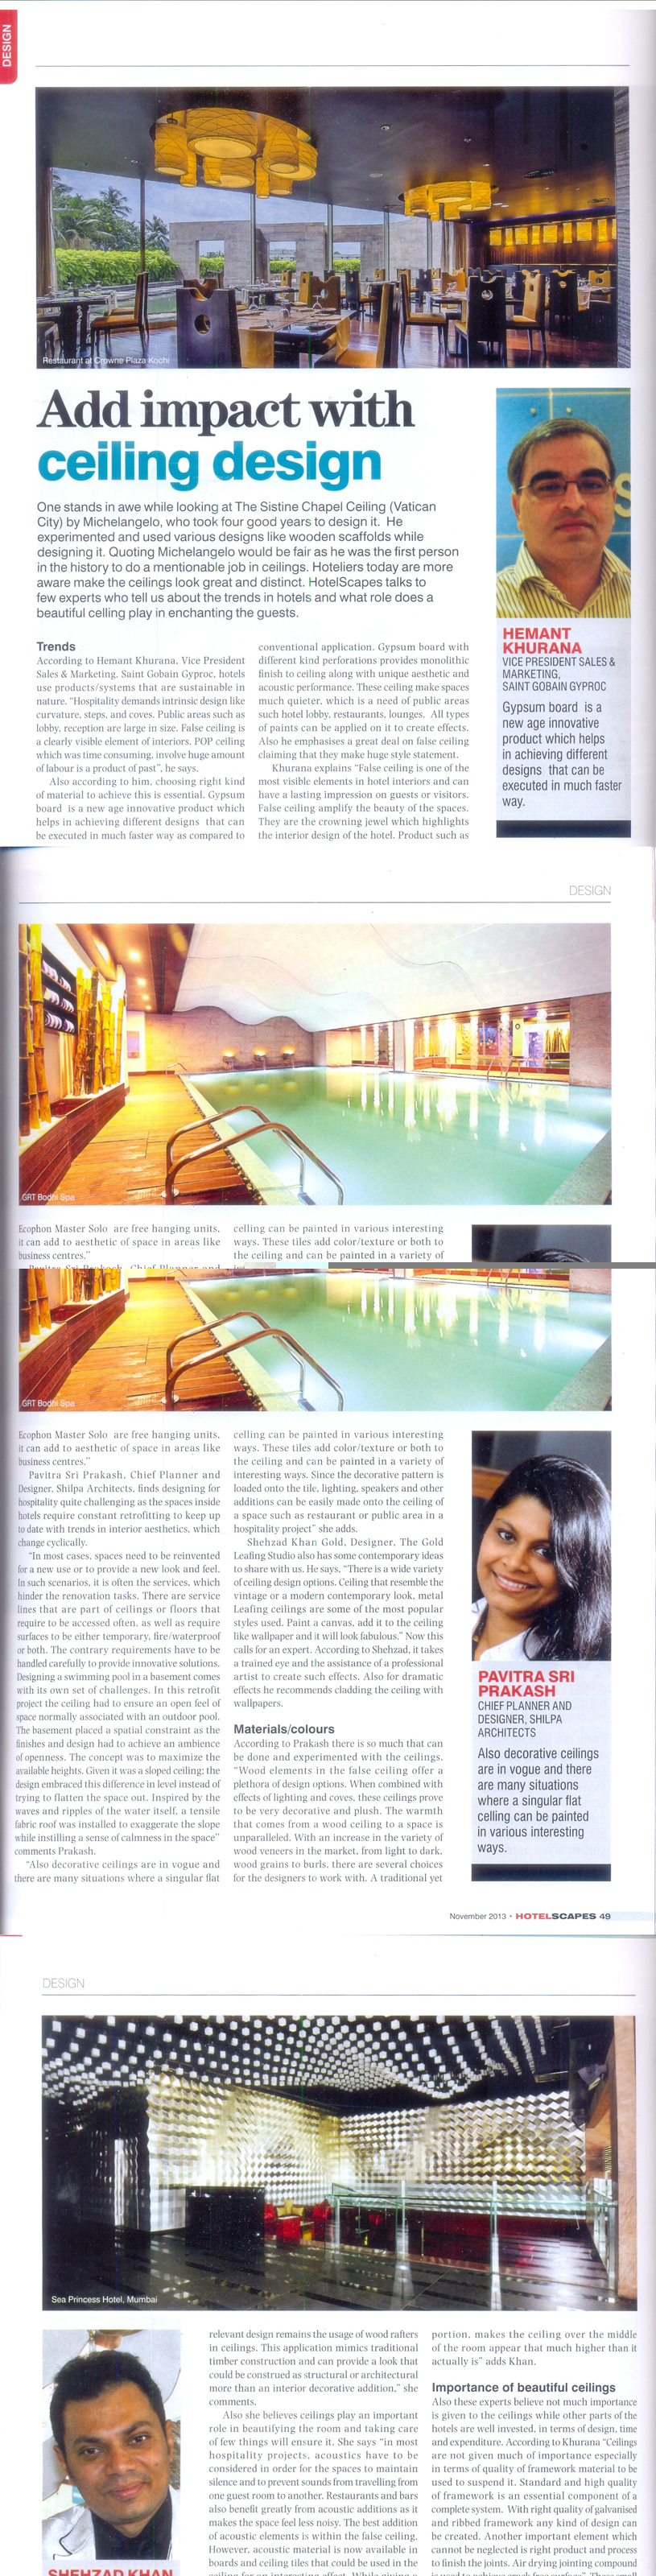 HotelScapes magazine Nov 2013 with Pavitra Sriprakash